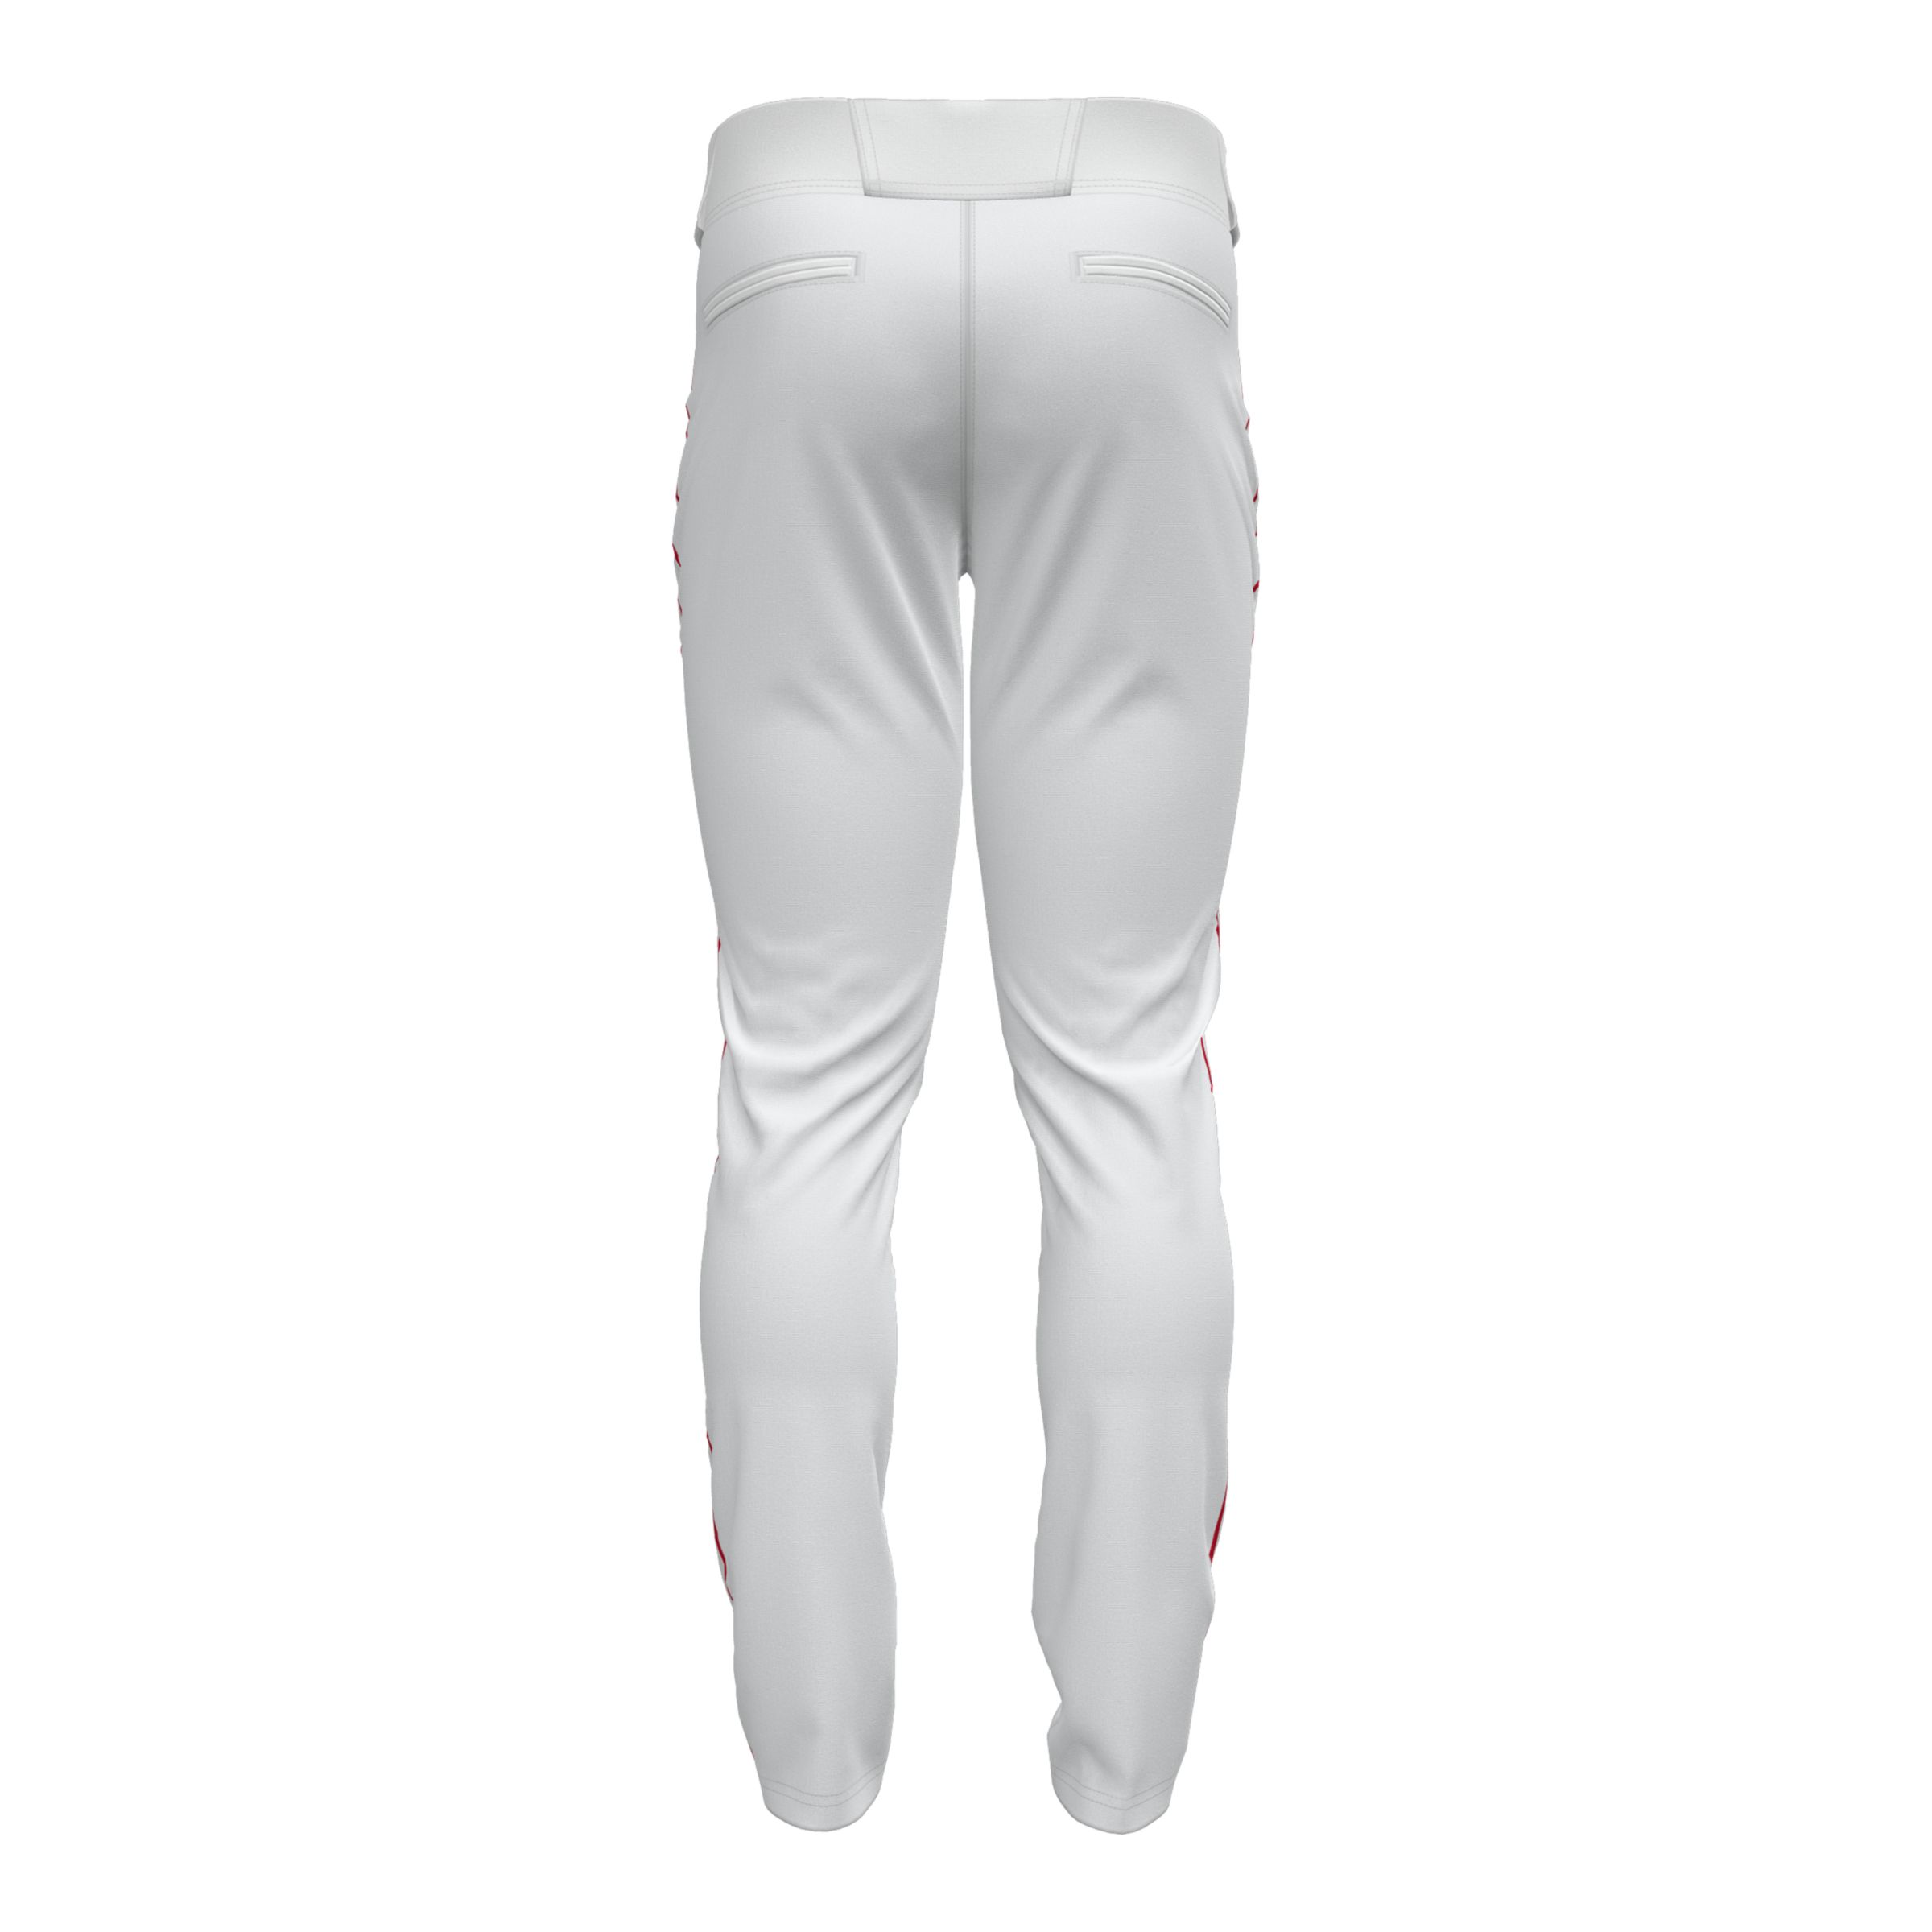 WHITE COMPRESSION LINER – ASPYR Athletic Wear